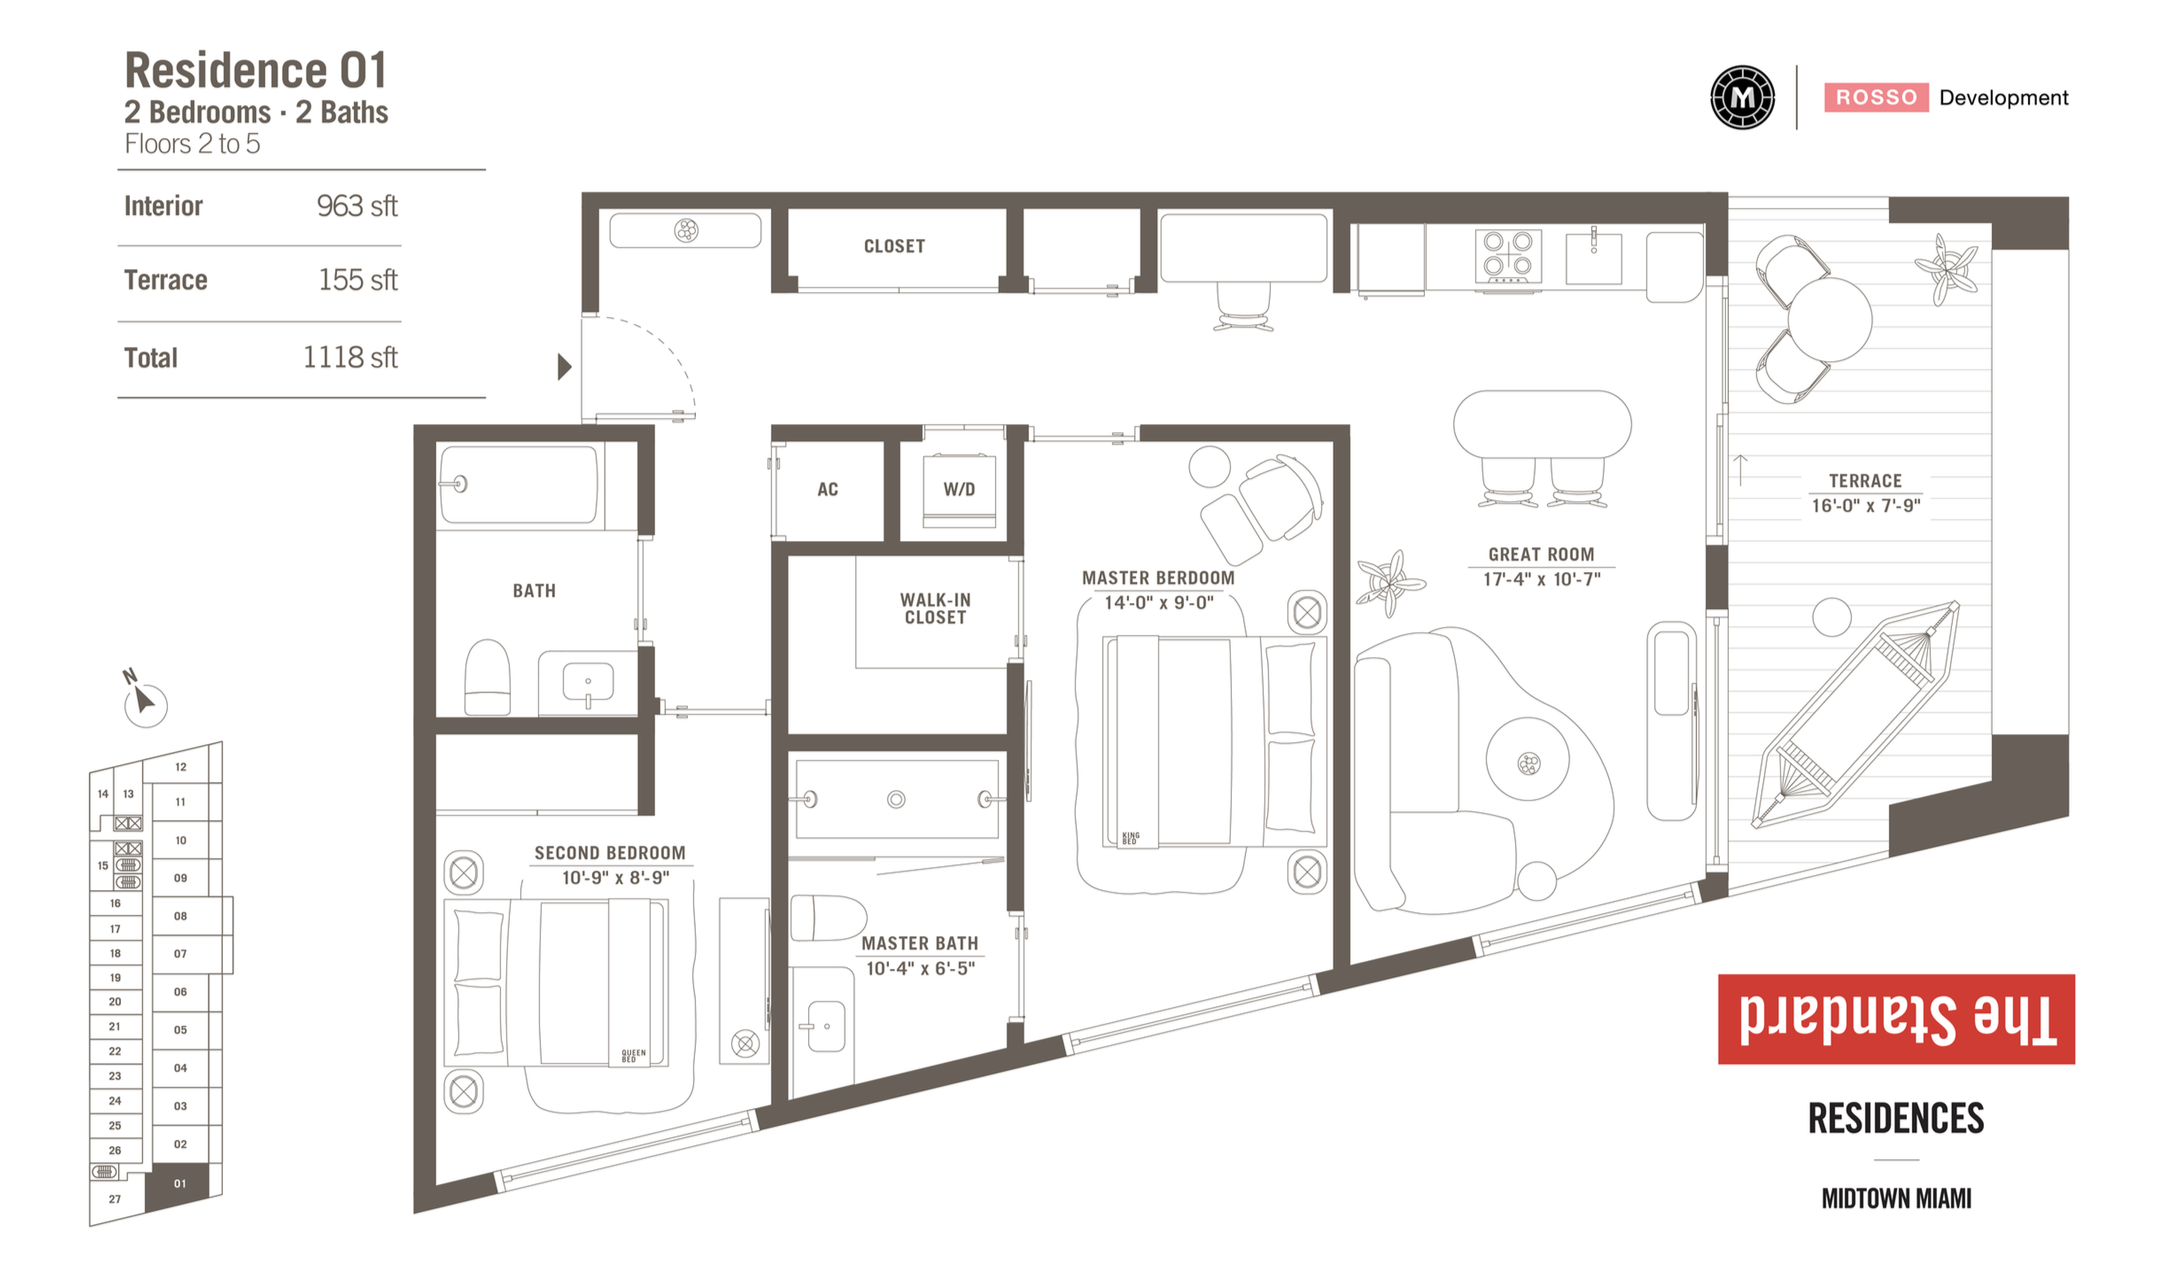 The Standard Residences | Residences 01 |  2 Be /2 Ba | 963 SF | Floor 2-5